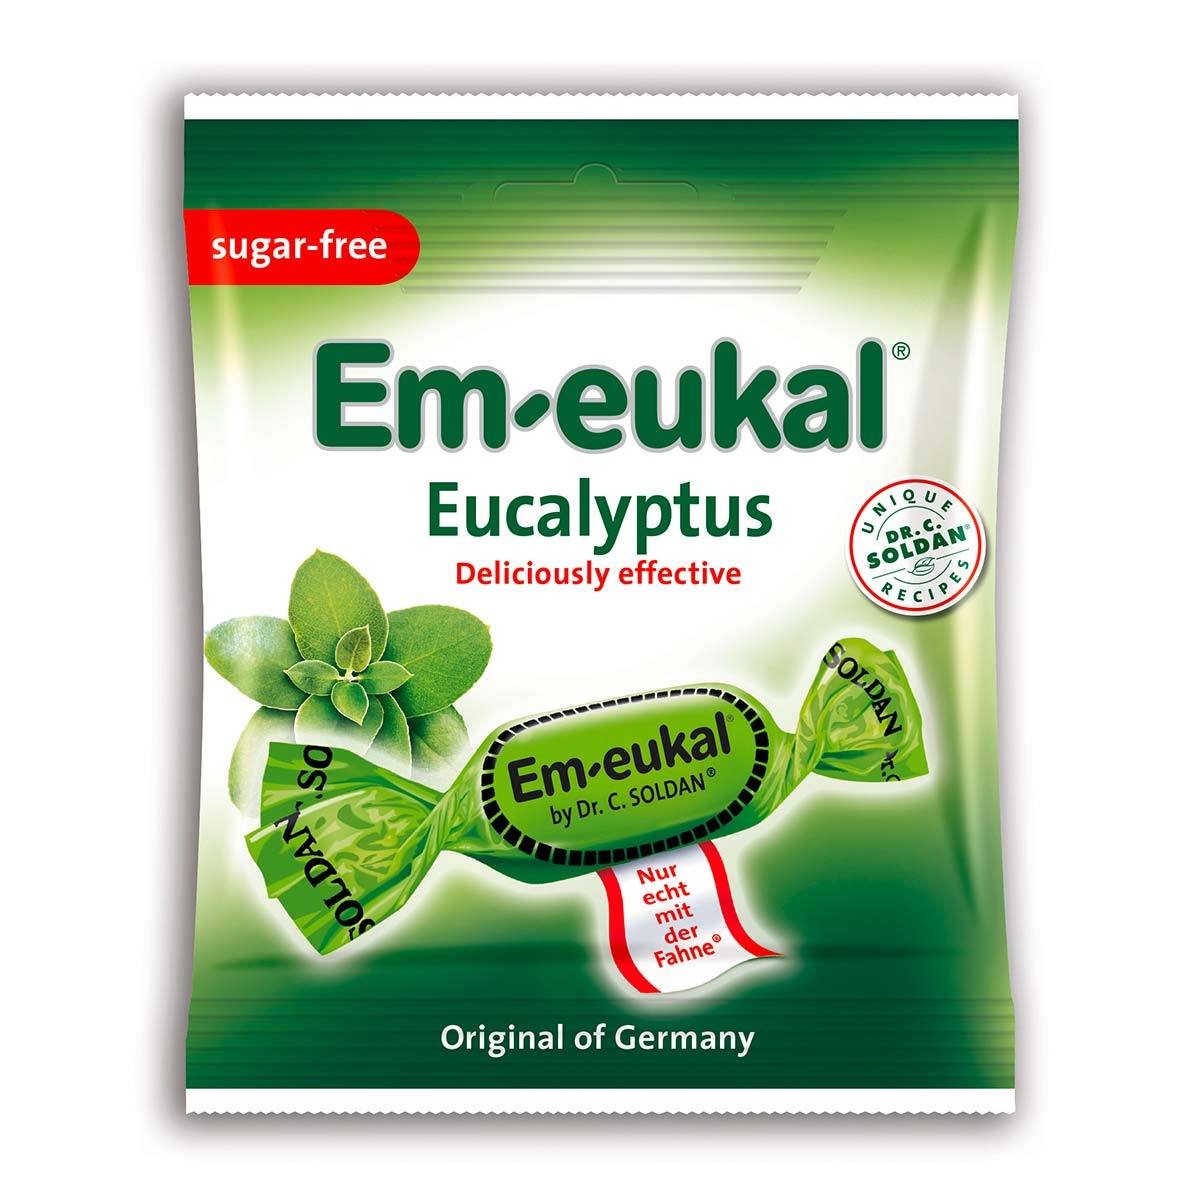 Primary image of Em-eukal Eucalyptus - Sugar-Free